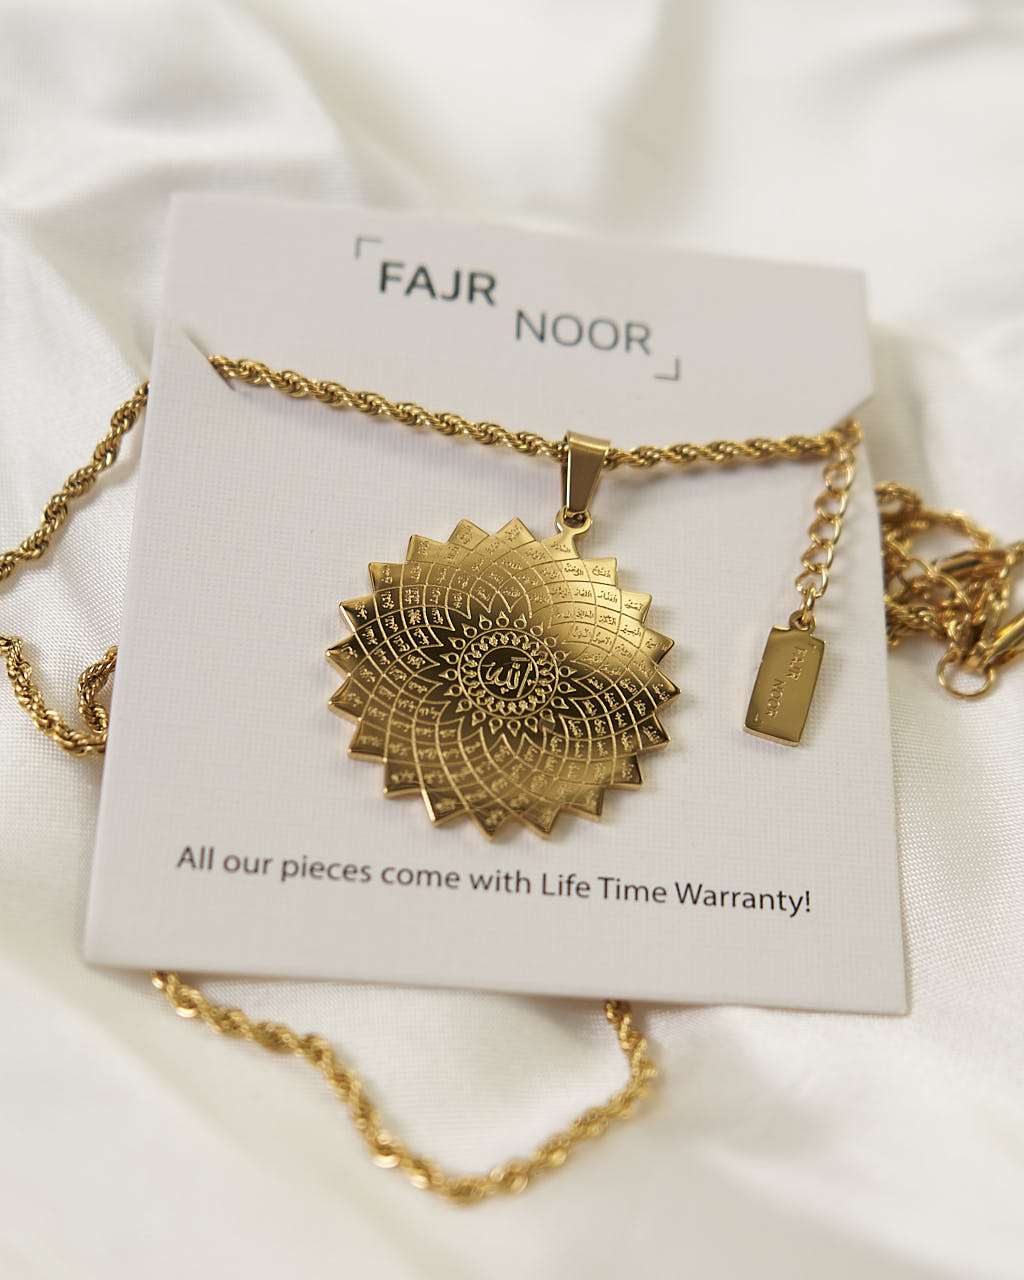 99 Names of Allah Necklace - Necklace - Fajr Noor